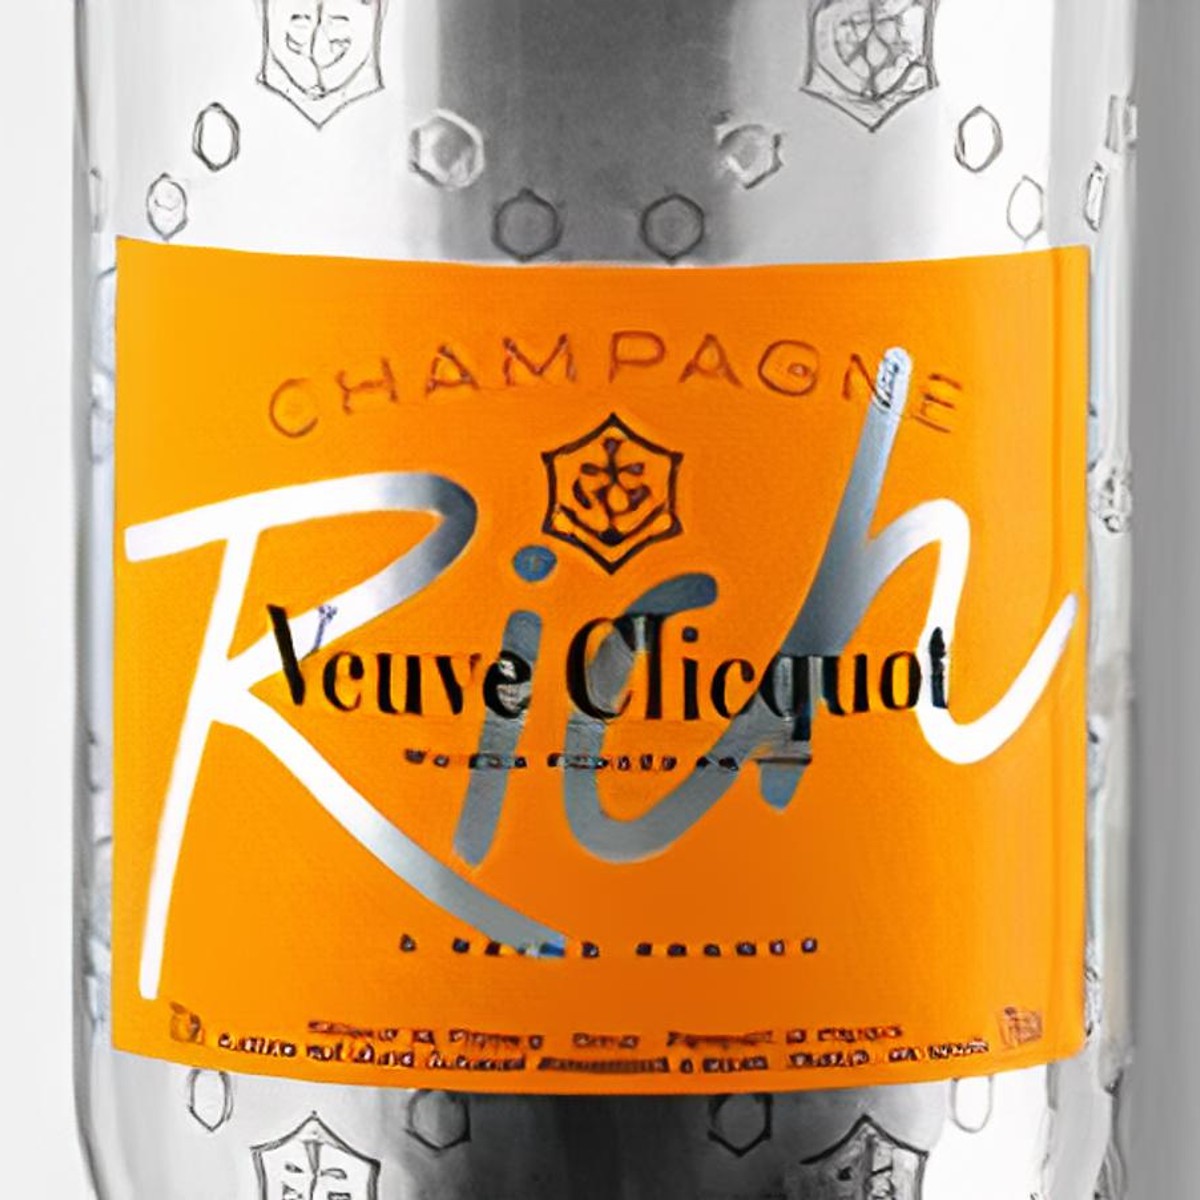 VEUVE CLICQUOT CHAMPAGNE BRUT YELLOW LABEL - 3L - Online Liquor Store NYC